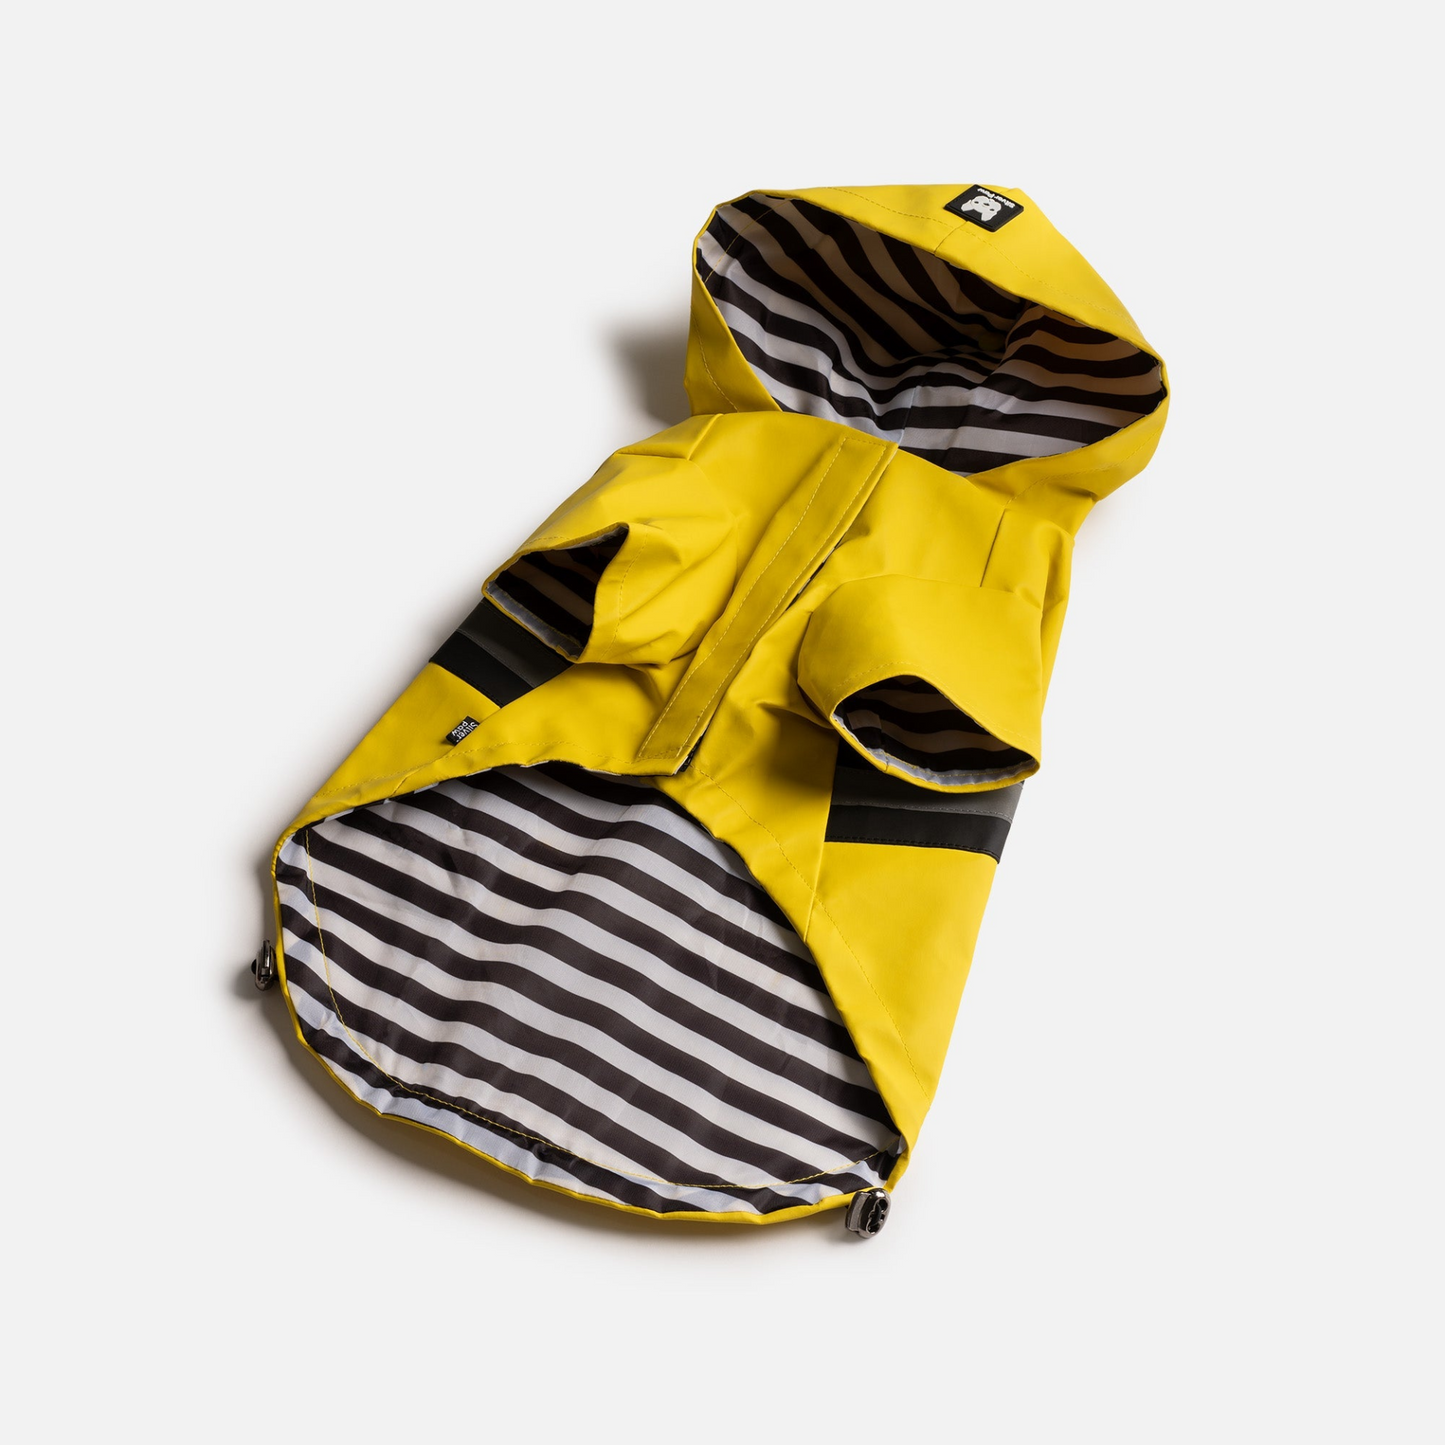 Aden Dog Raincoat - Yellow, Goodies N Stuff